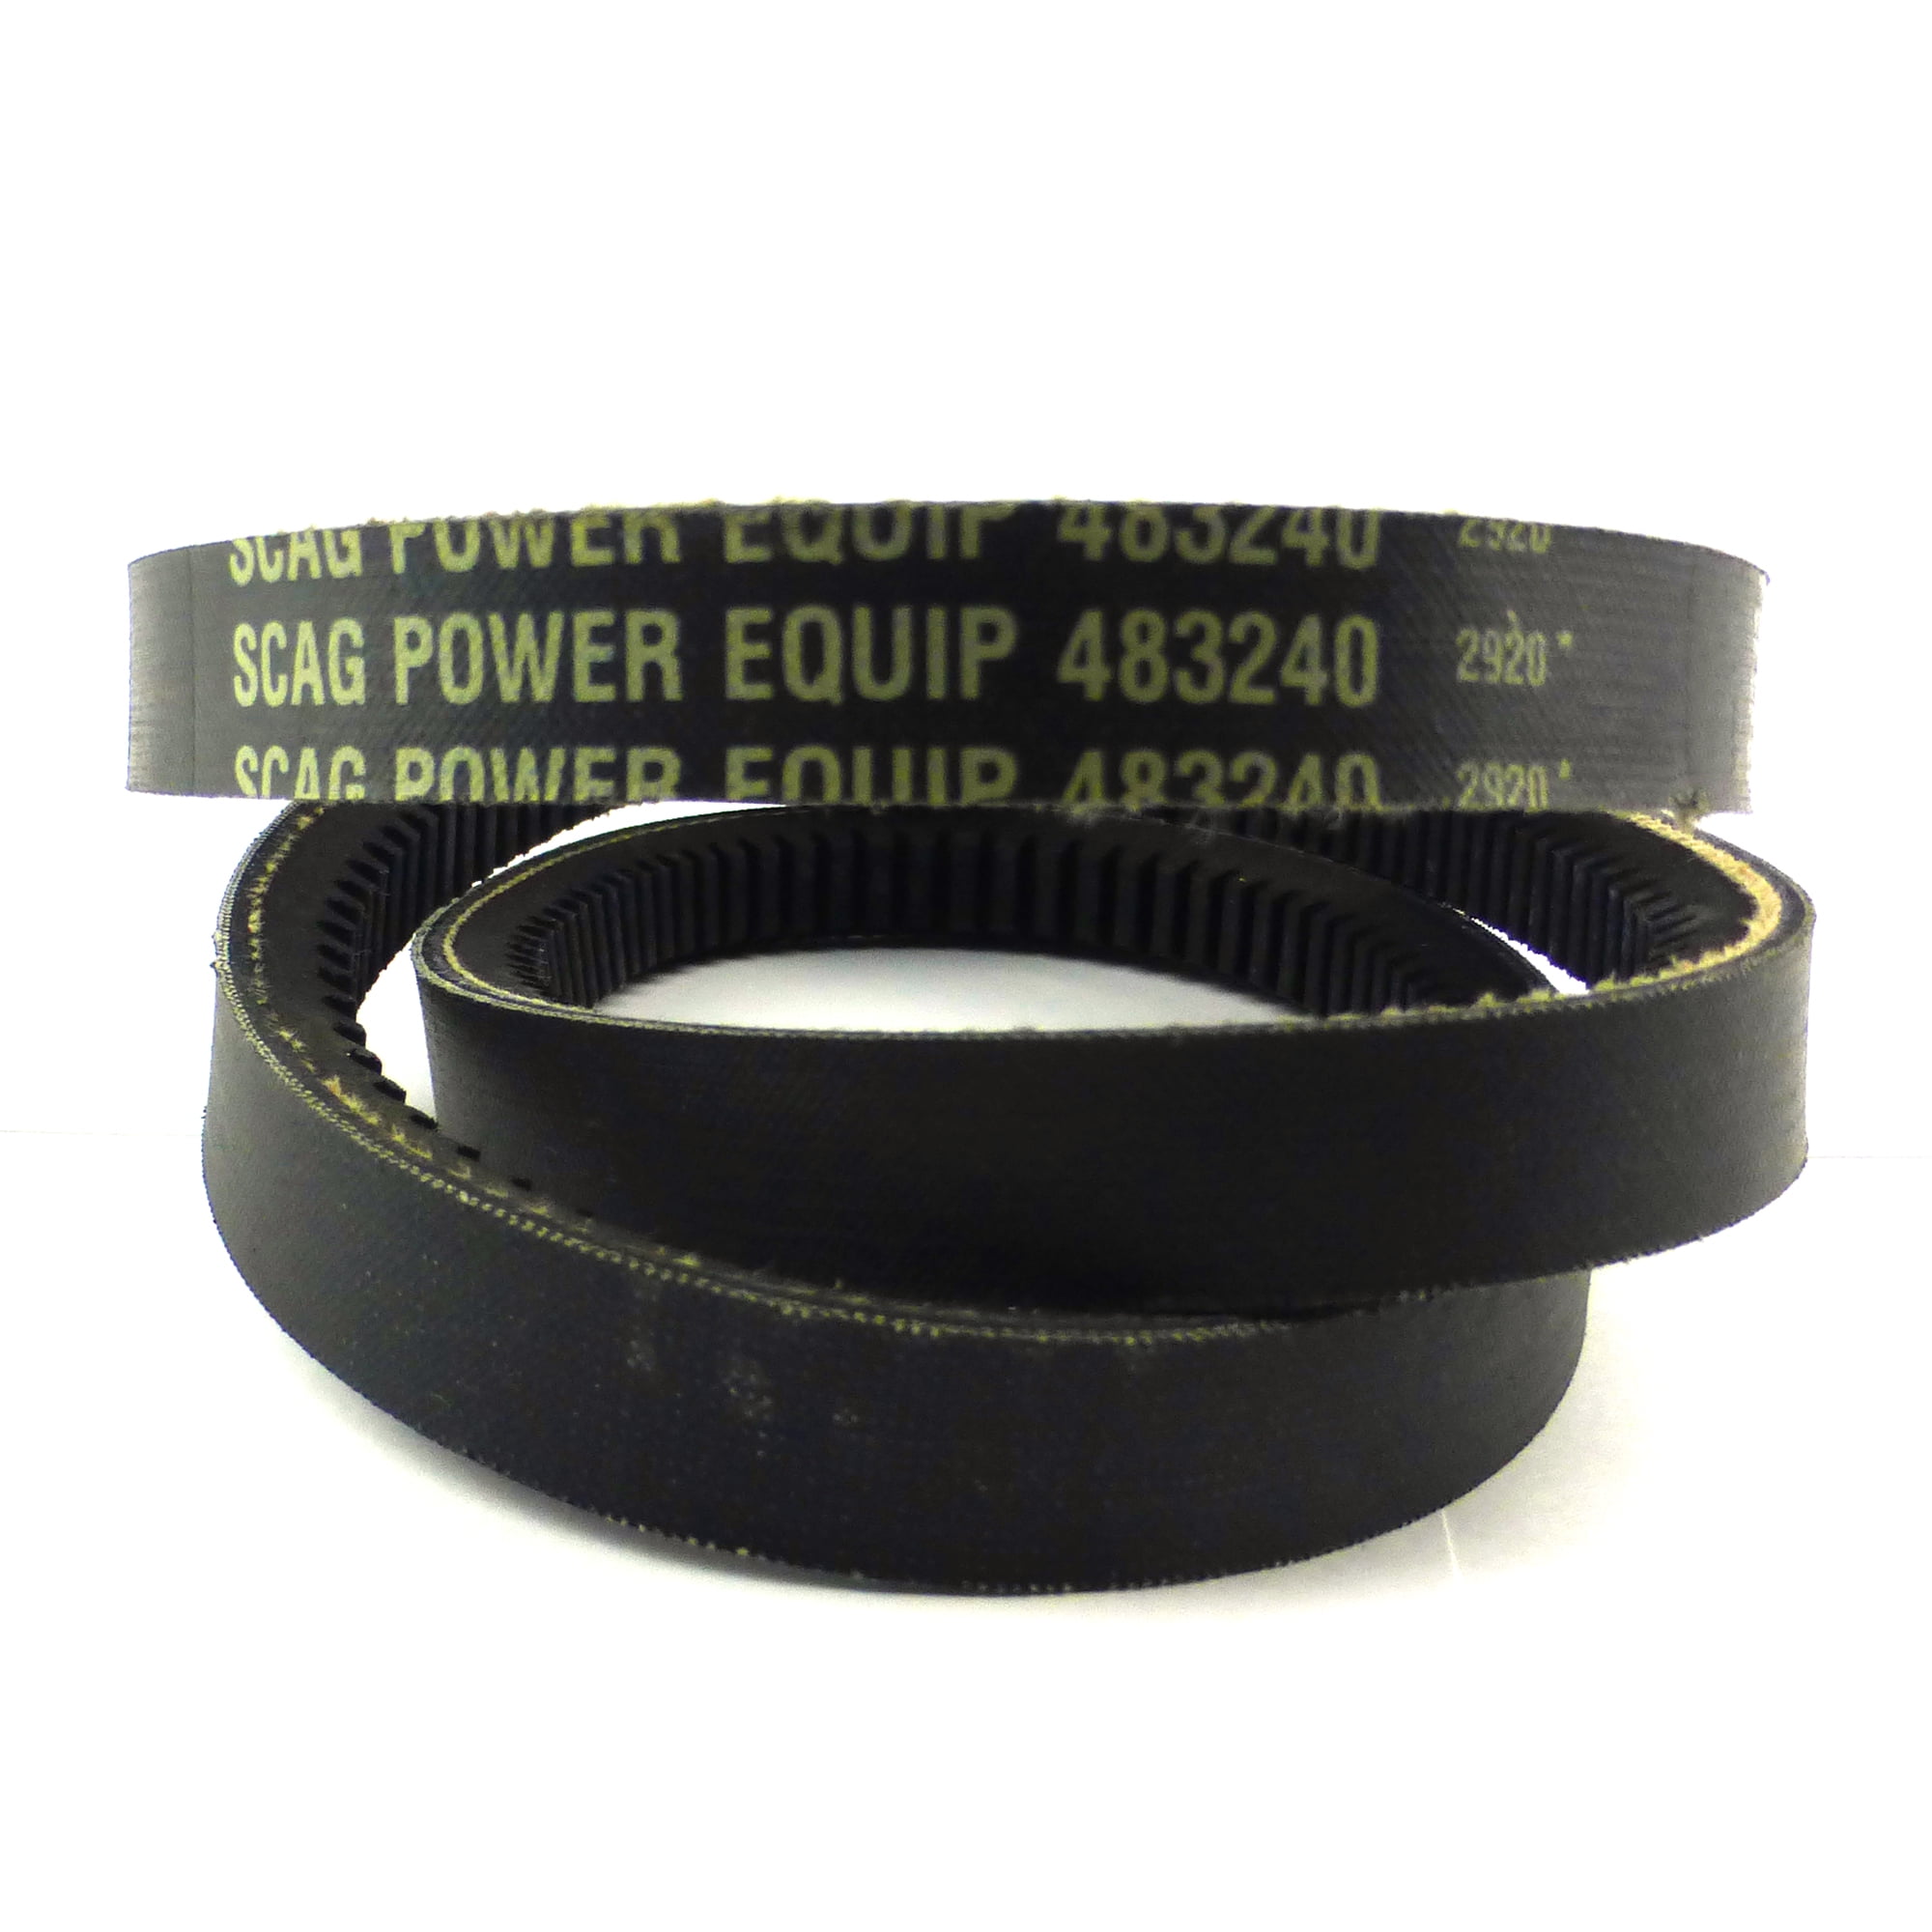 Scag Power Equipment 483157 Replacement Belt for sale online 